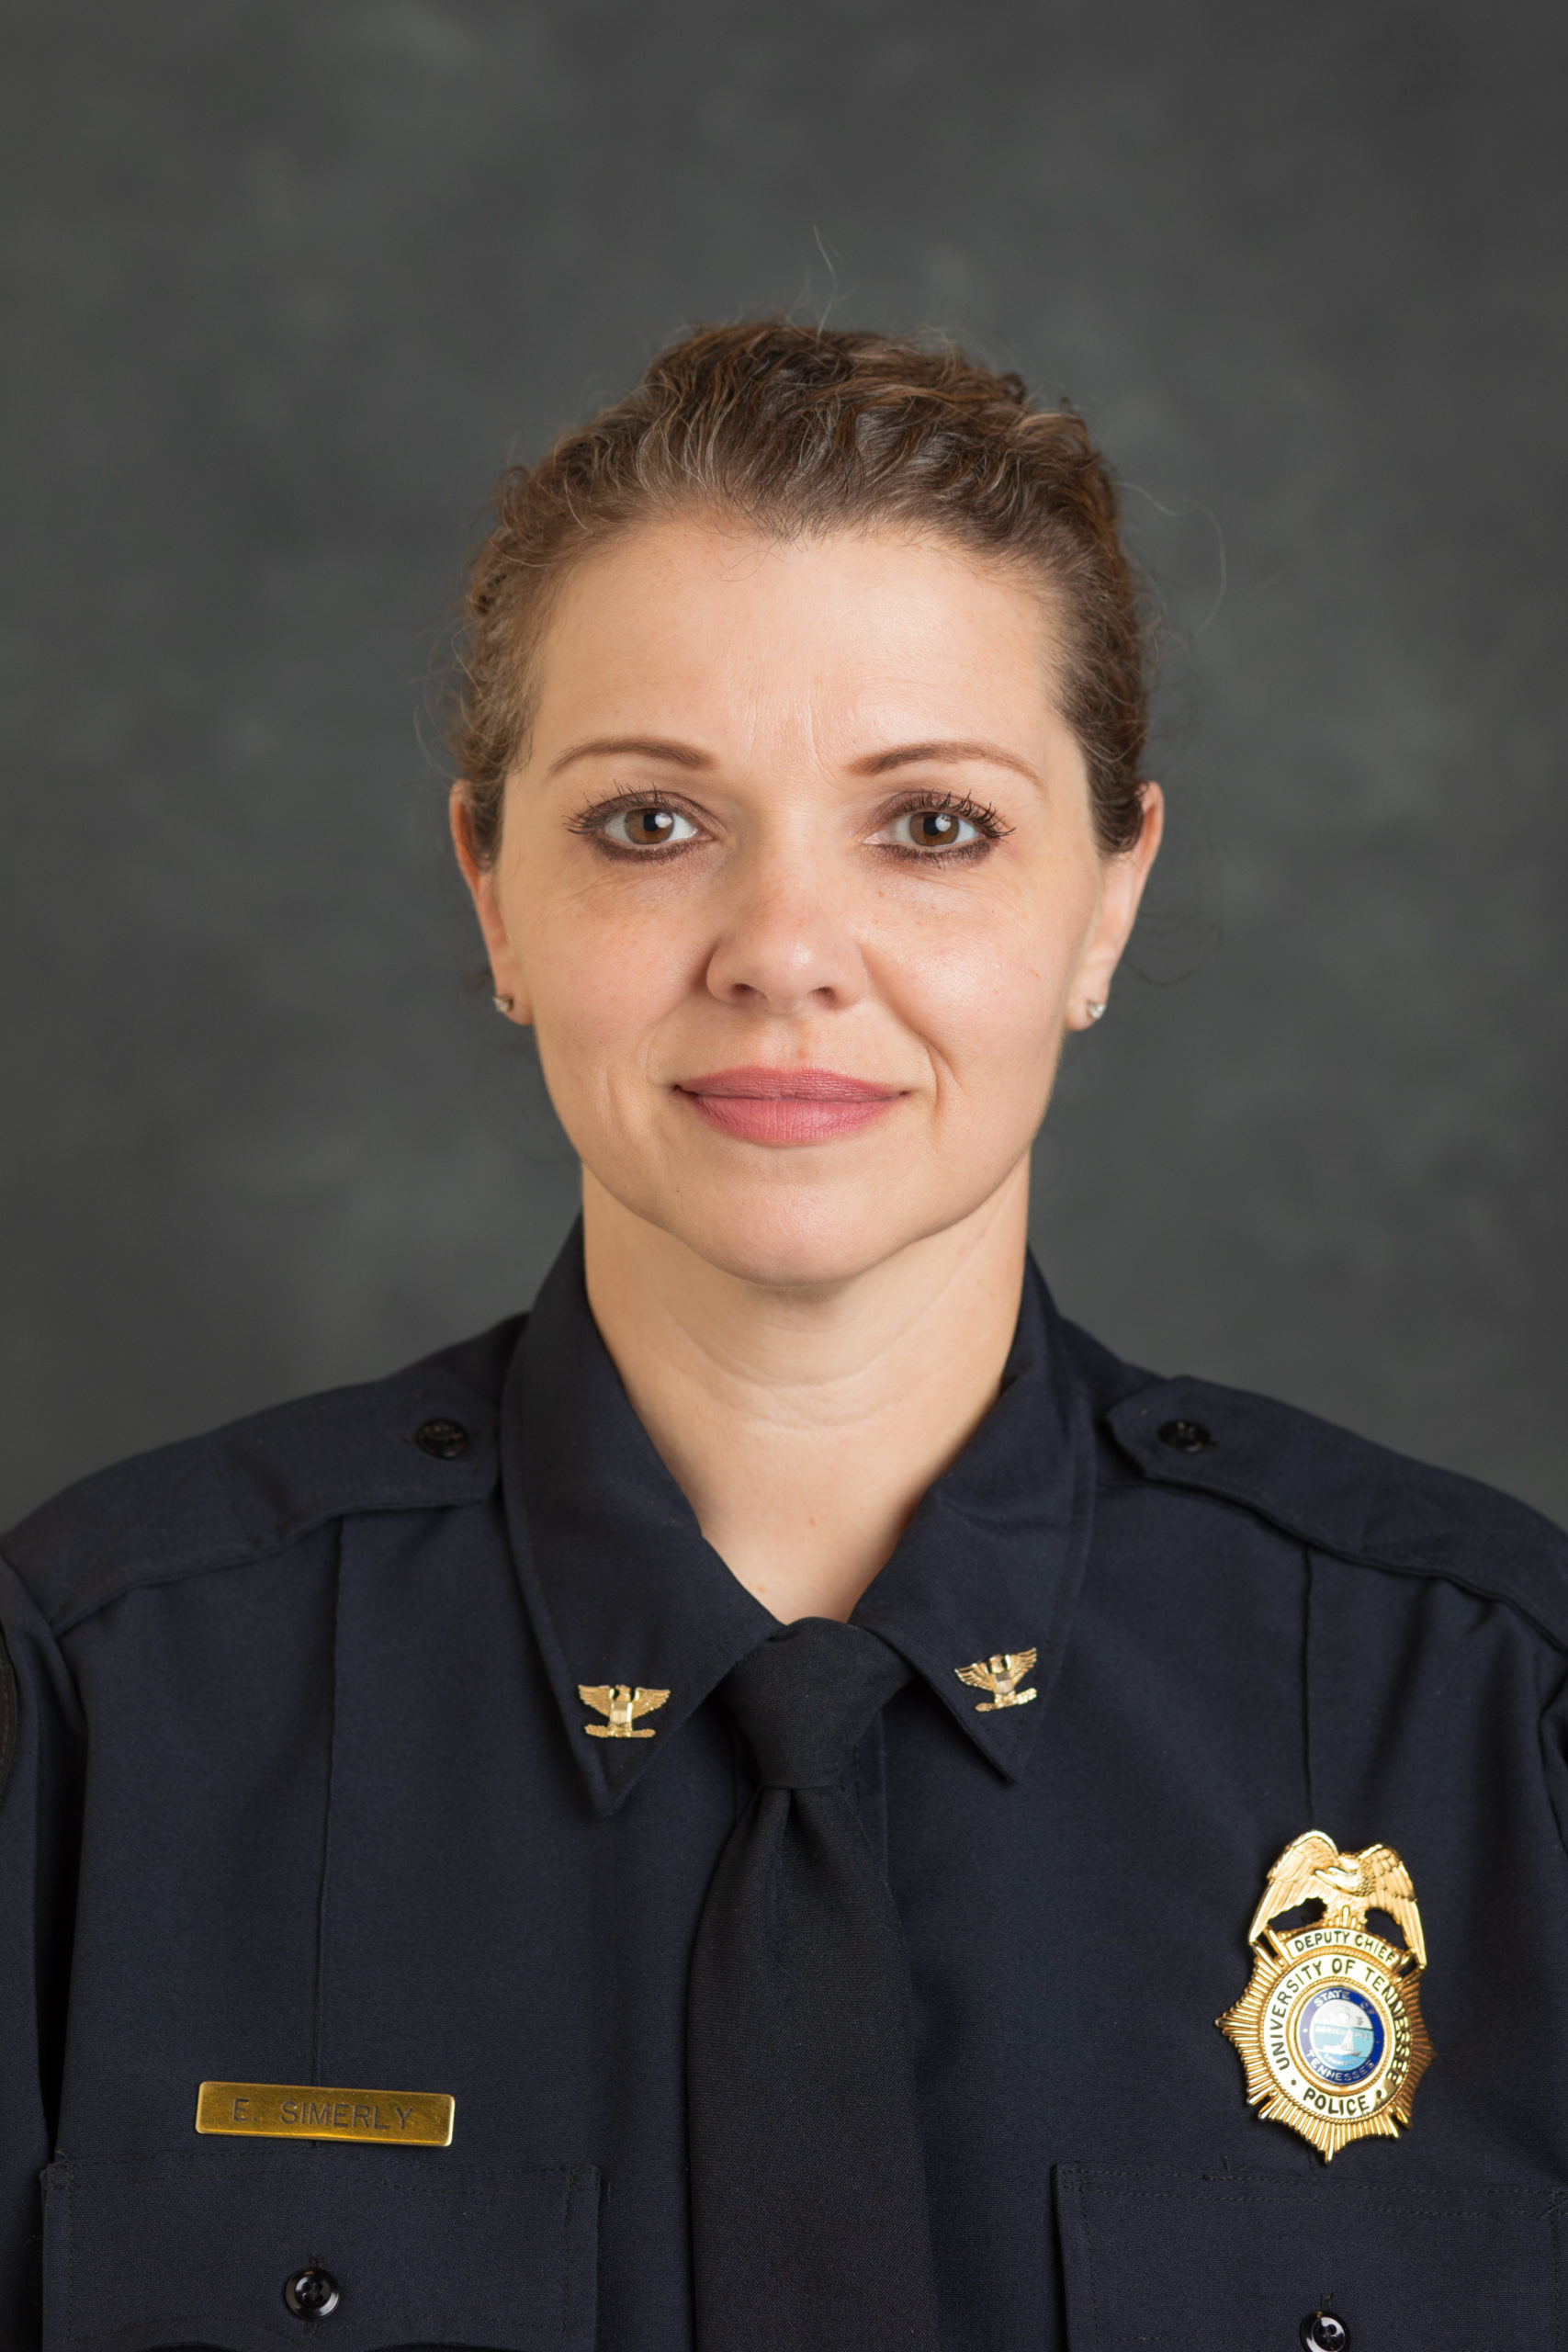 Deputy Chief Emily Simerly